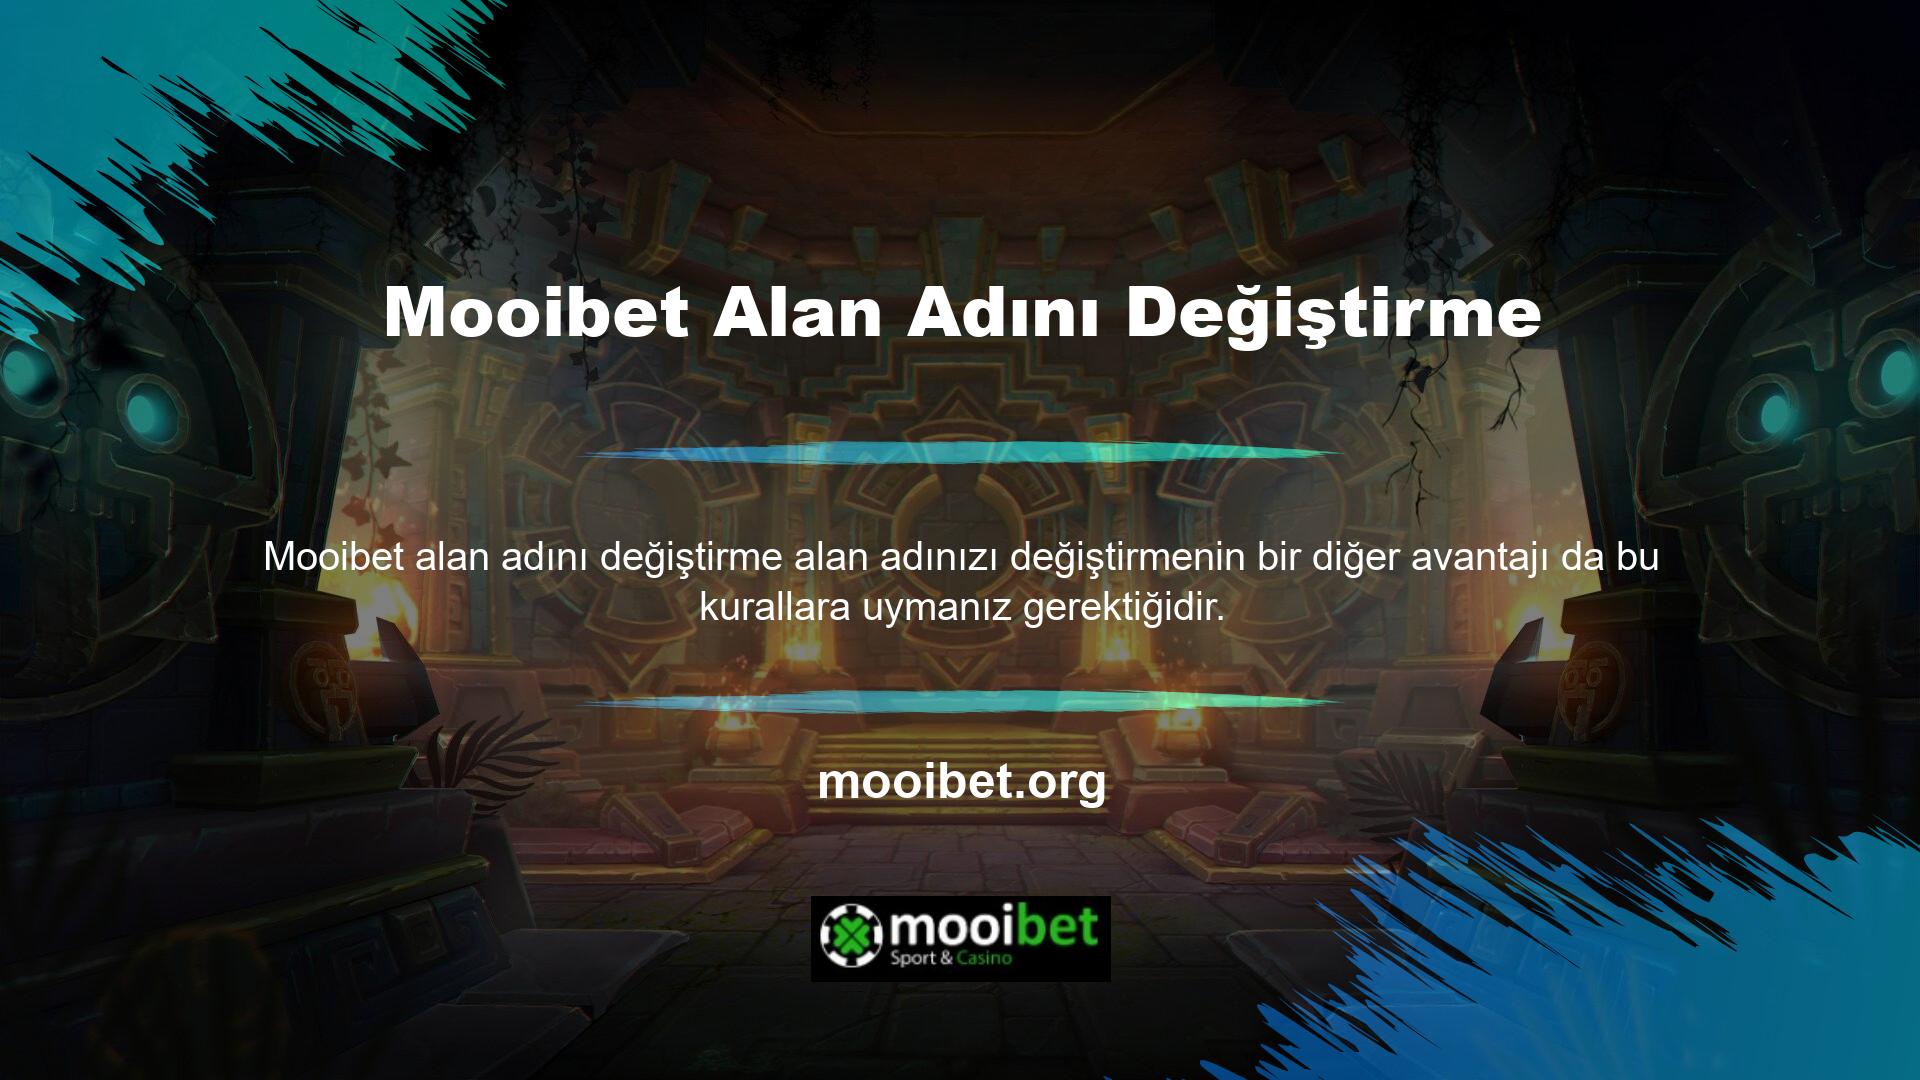 Mooibet platformunda işlem yapmak hala çok kolay